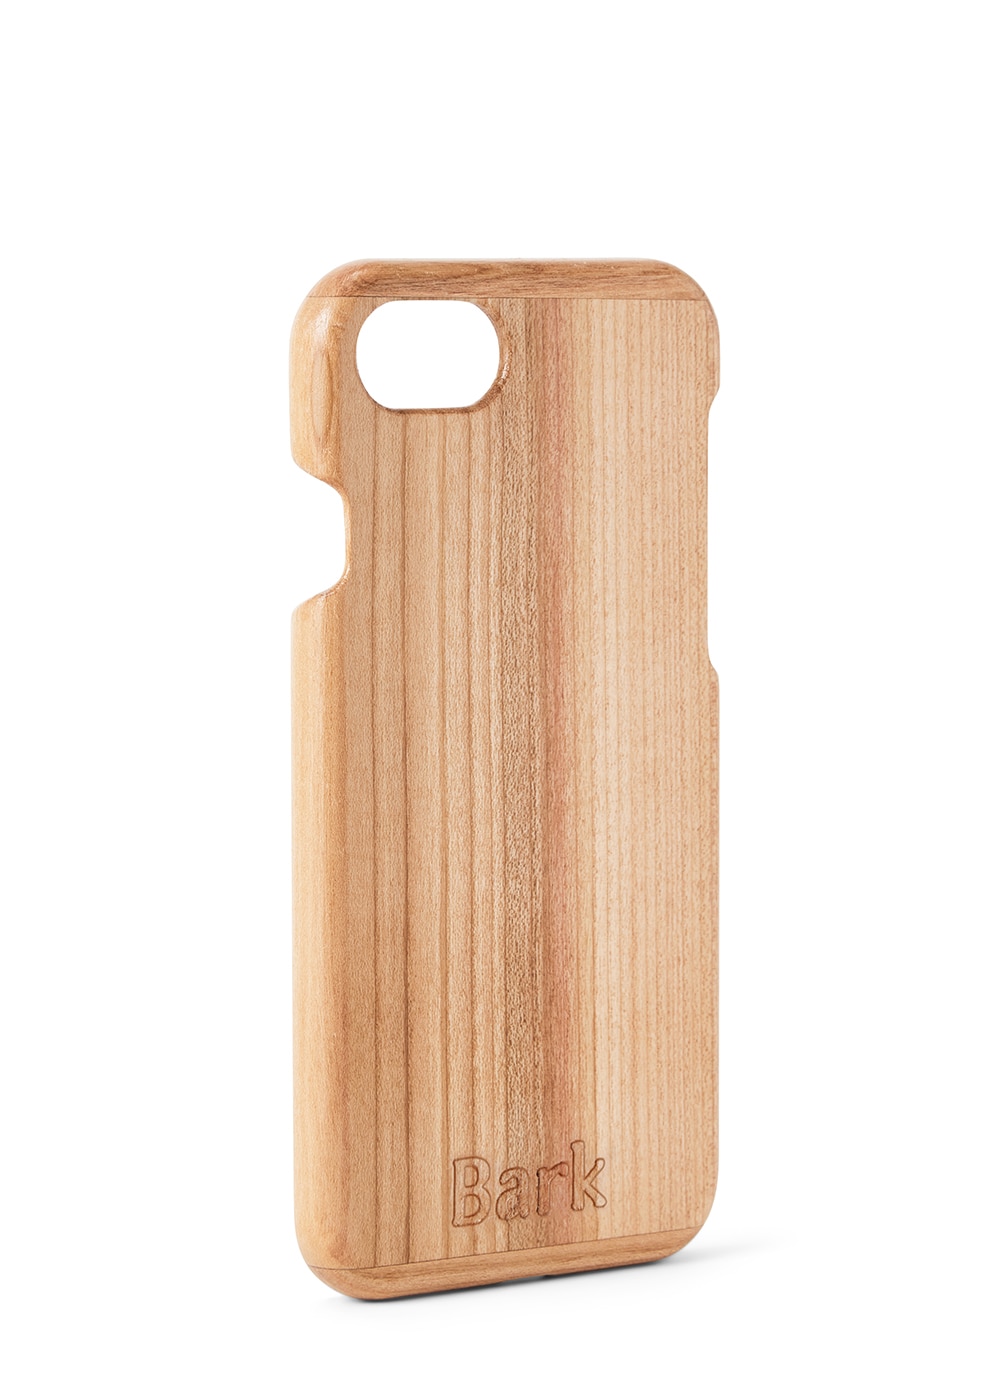 iPhone SE (2020) case made of Swedish hardwood - Körsbär